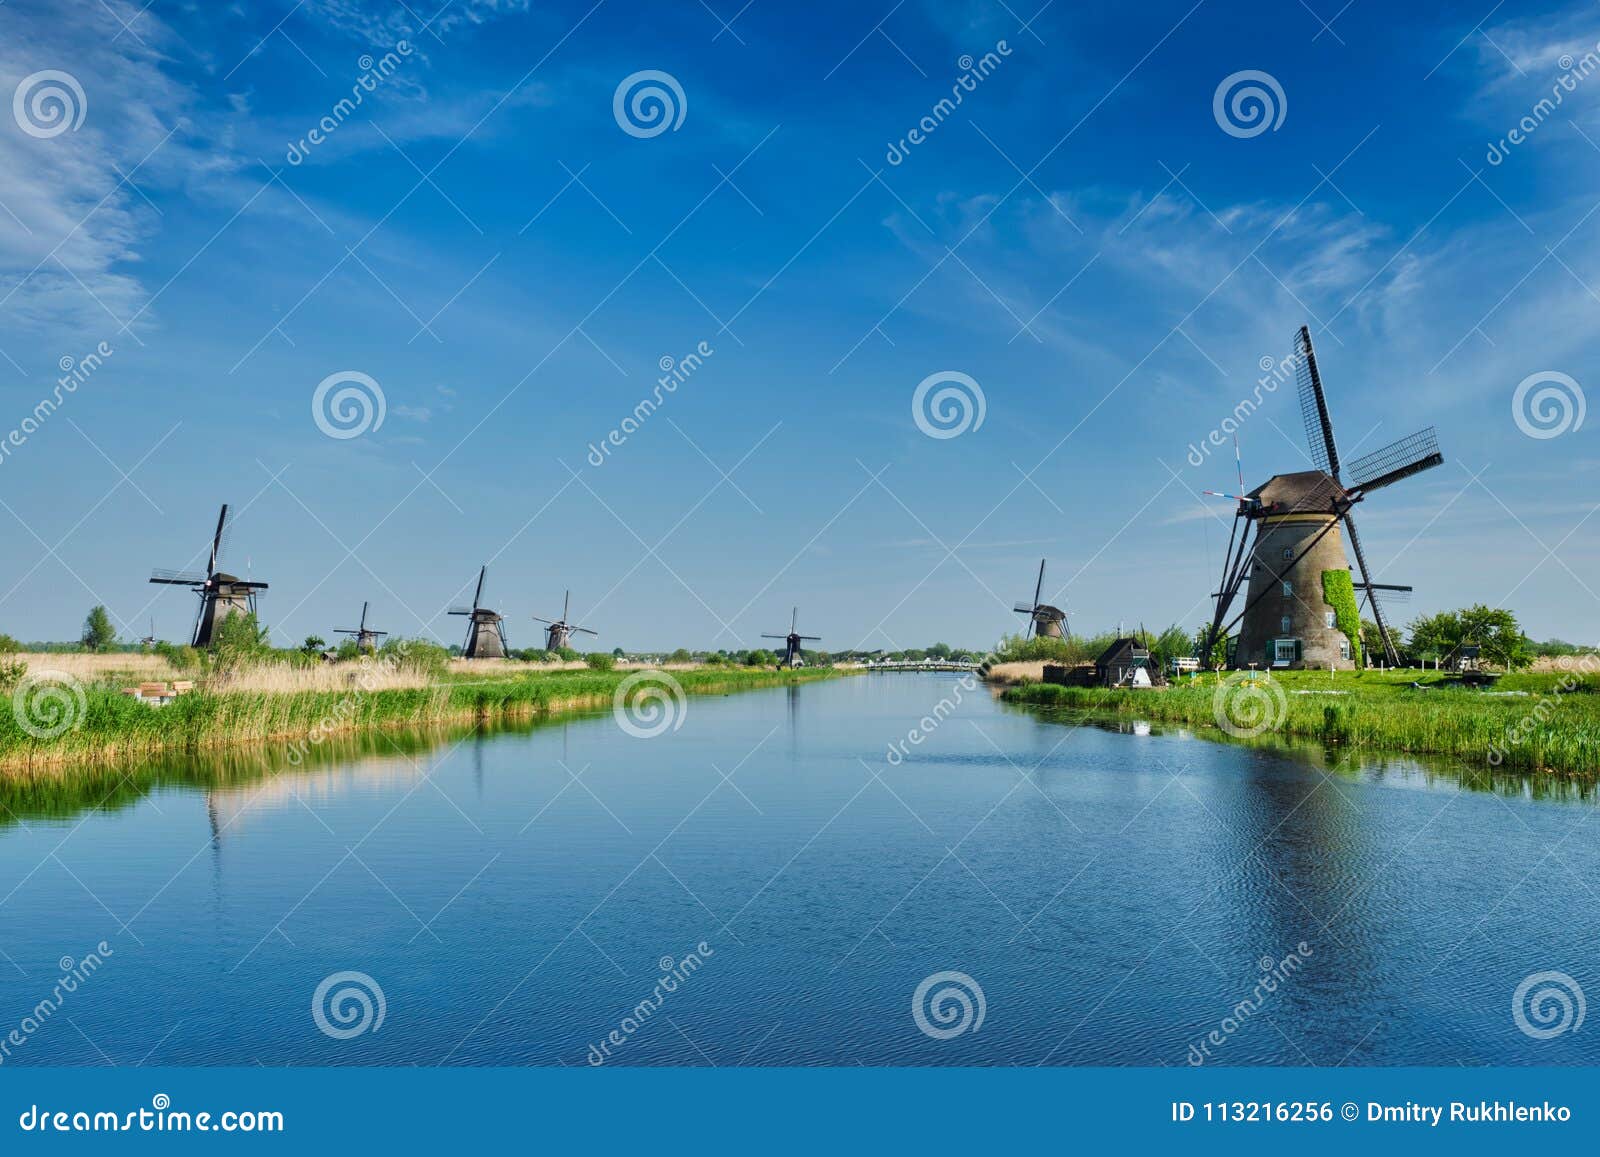 windmills at kinderdijk in holland. netherlands